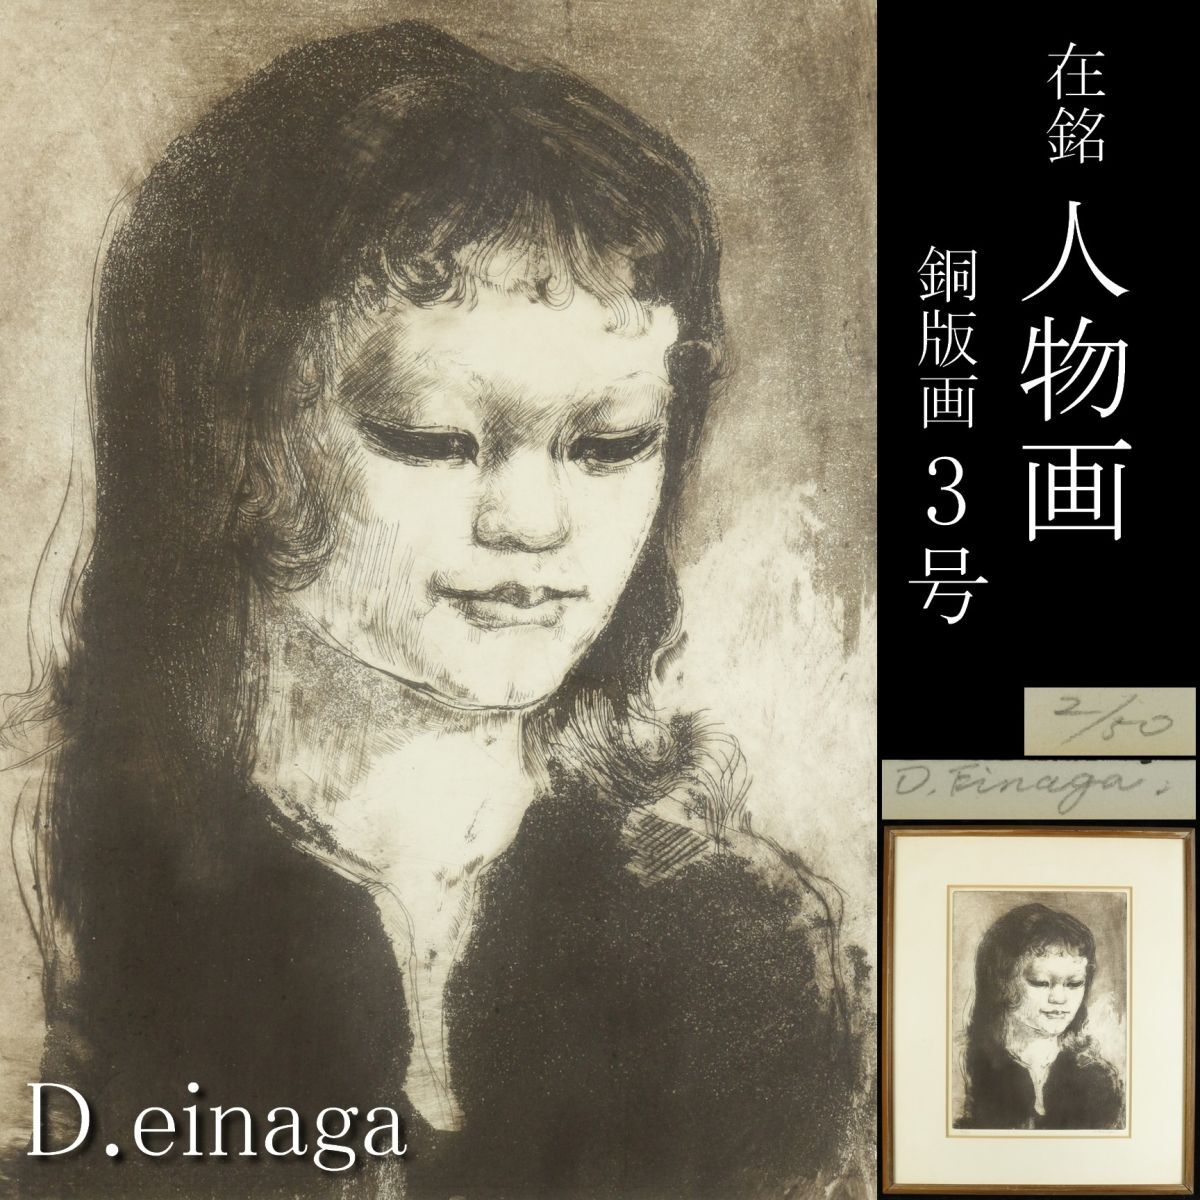 【LIG】作家物 D.einaga 在銘 人物画 3号 銅版画 肉筆サイン コレクター収蔵品 [.W]24.1_画像1